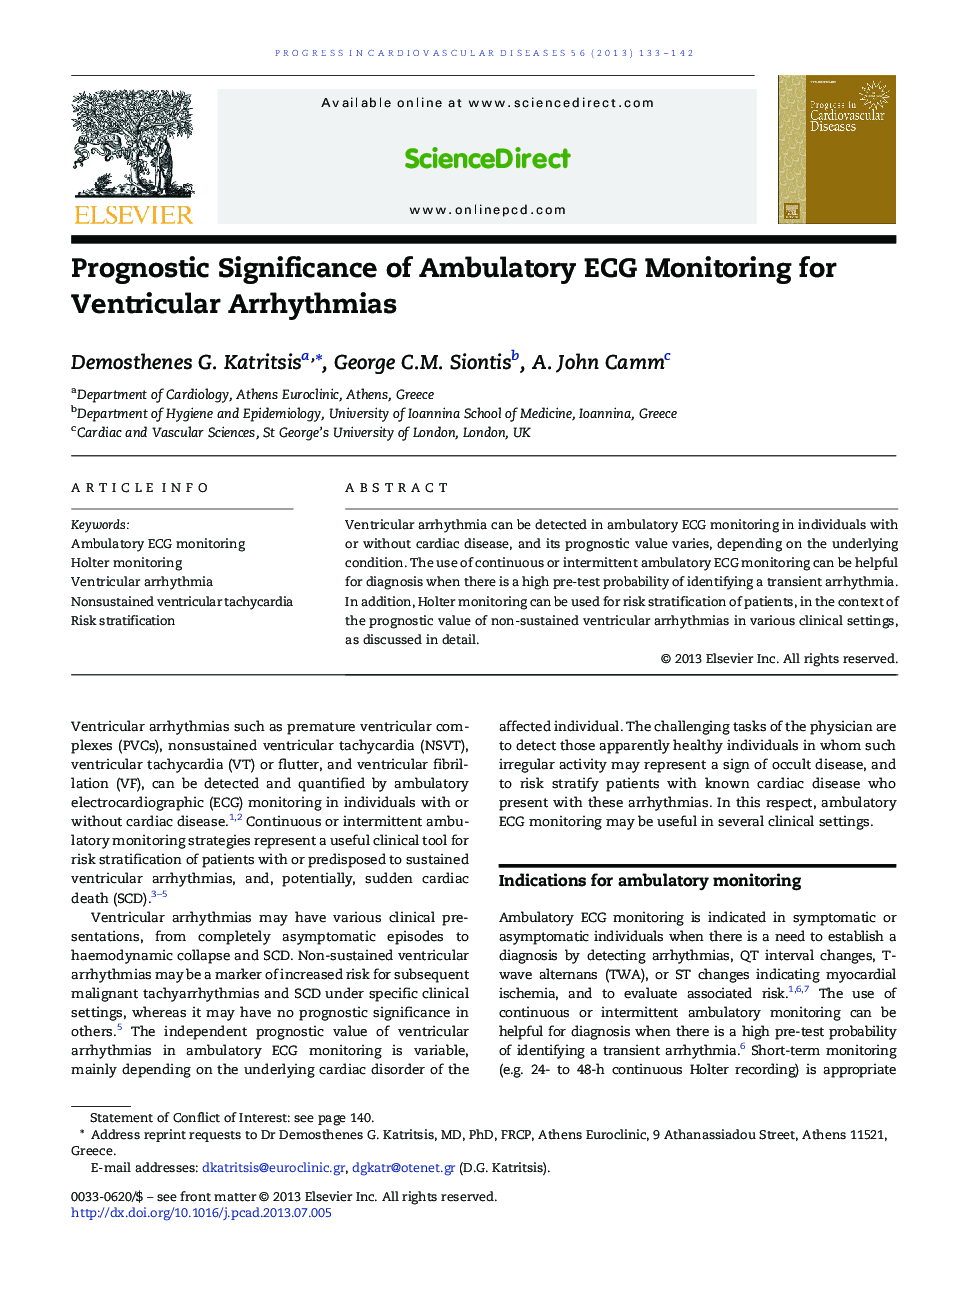 Prognostic Significance of Ambulatory ECG Monitoring for Ventricular Arrhythmias 